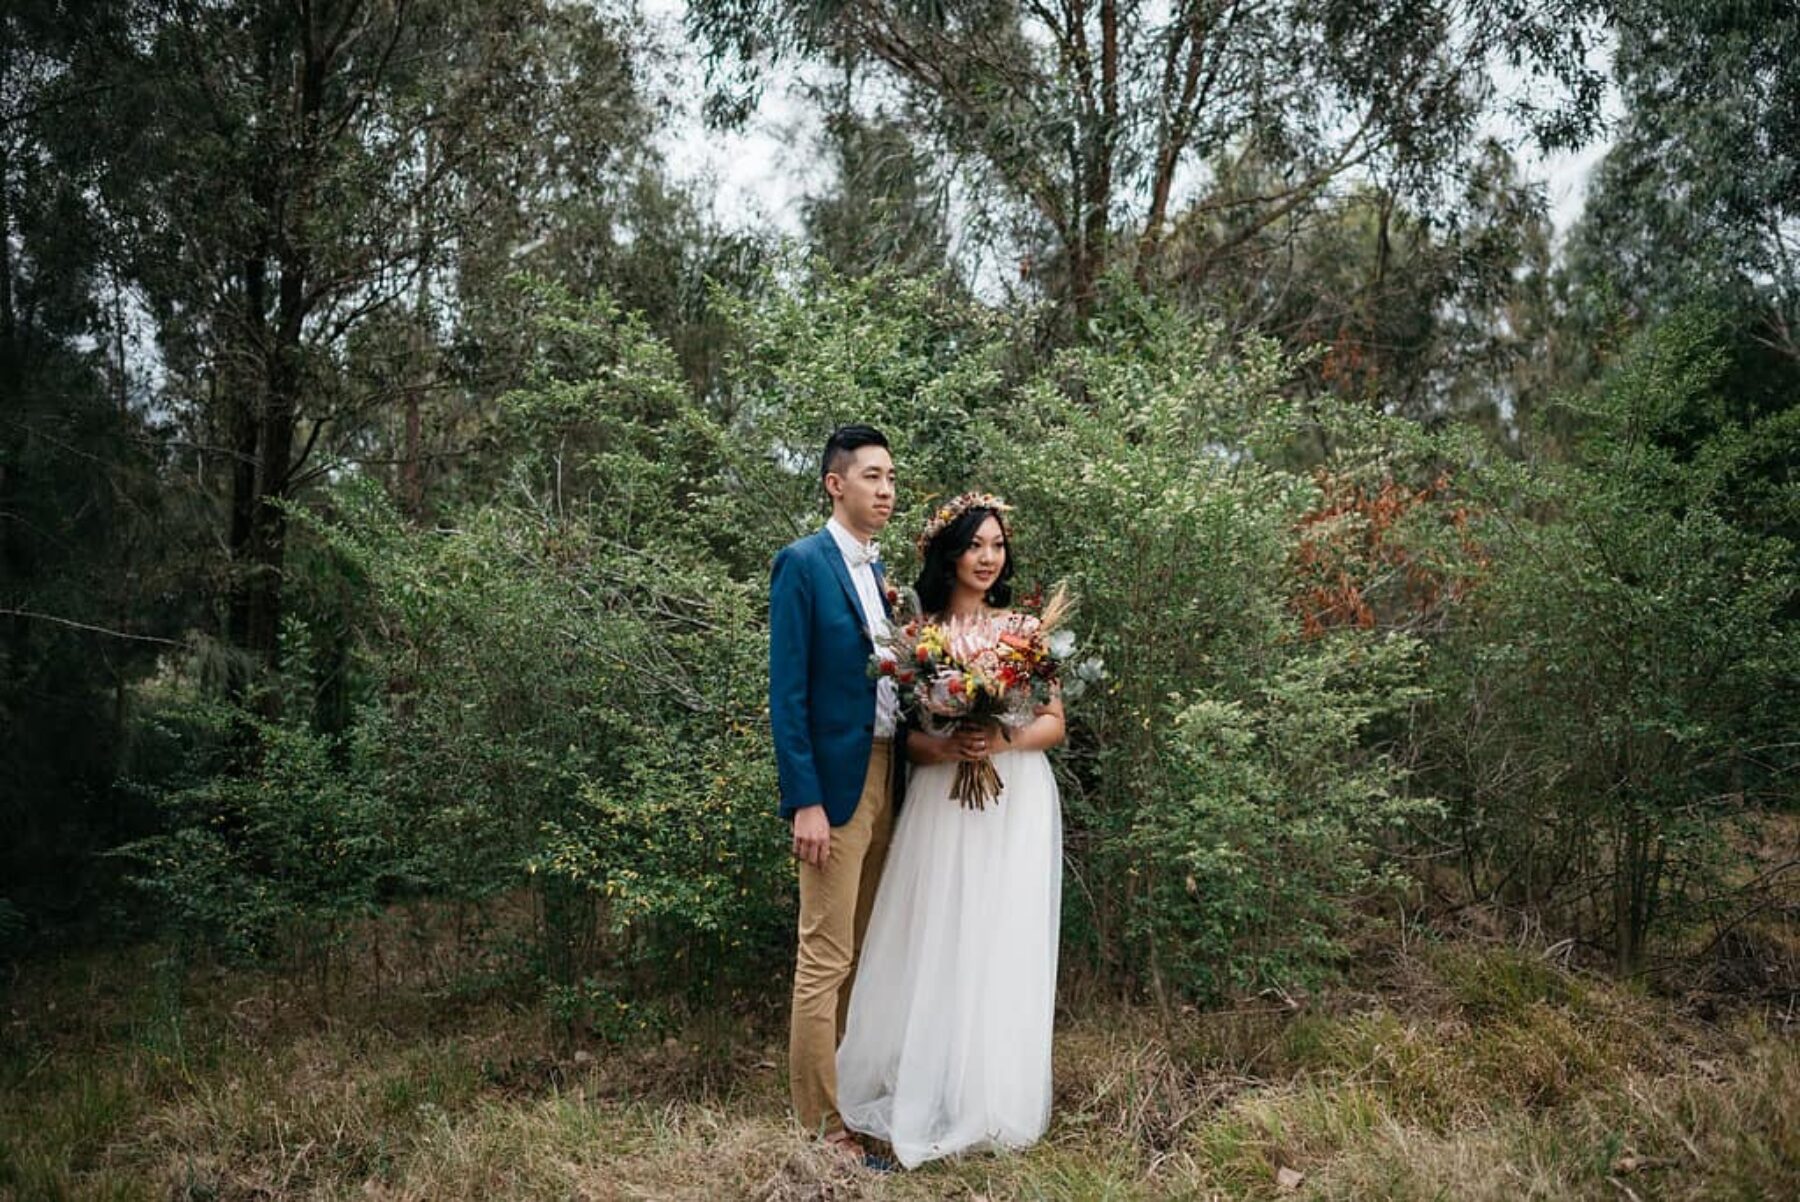 DIY Australiana wedding at Camden Town Farm - photography by Studio Something